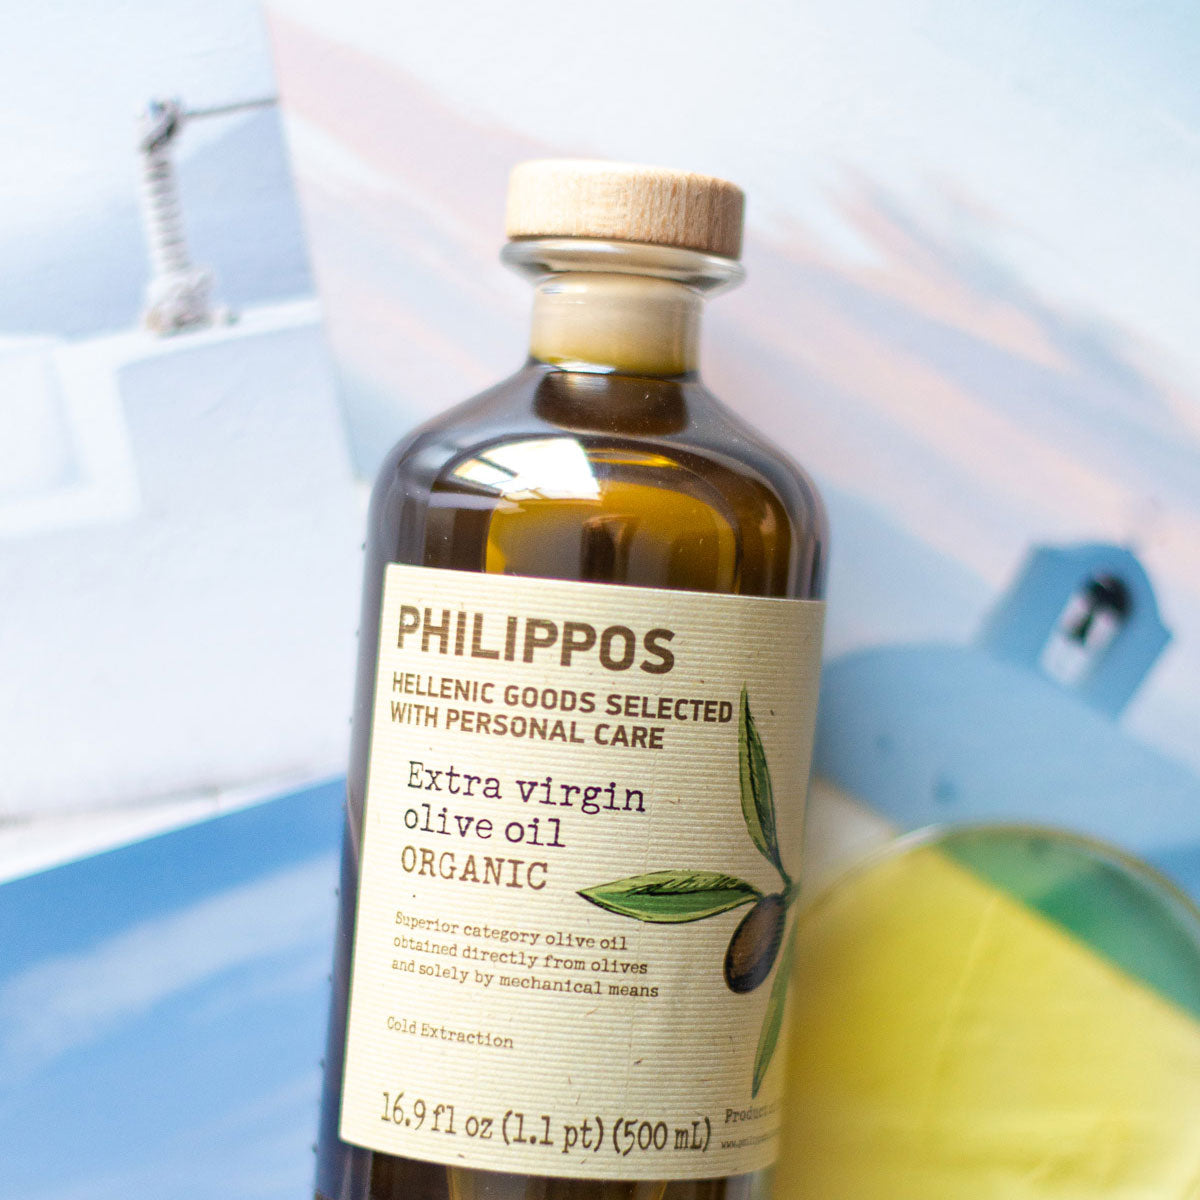 Philippos Hellenic Goods organic extra virgin olive oil